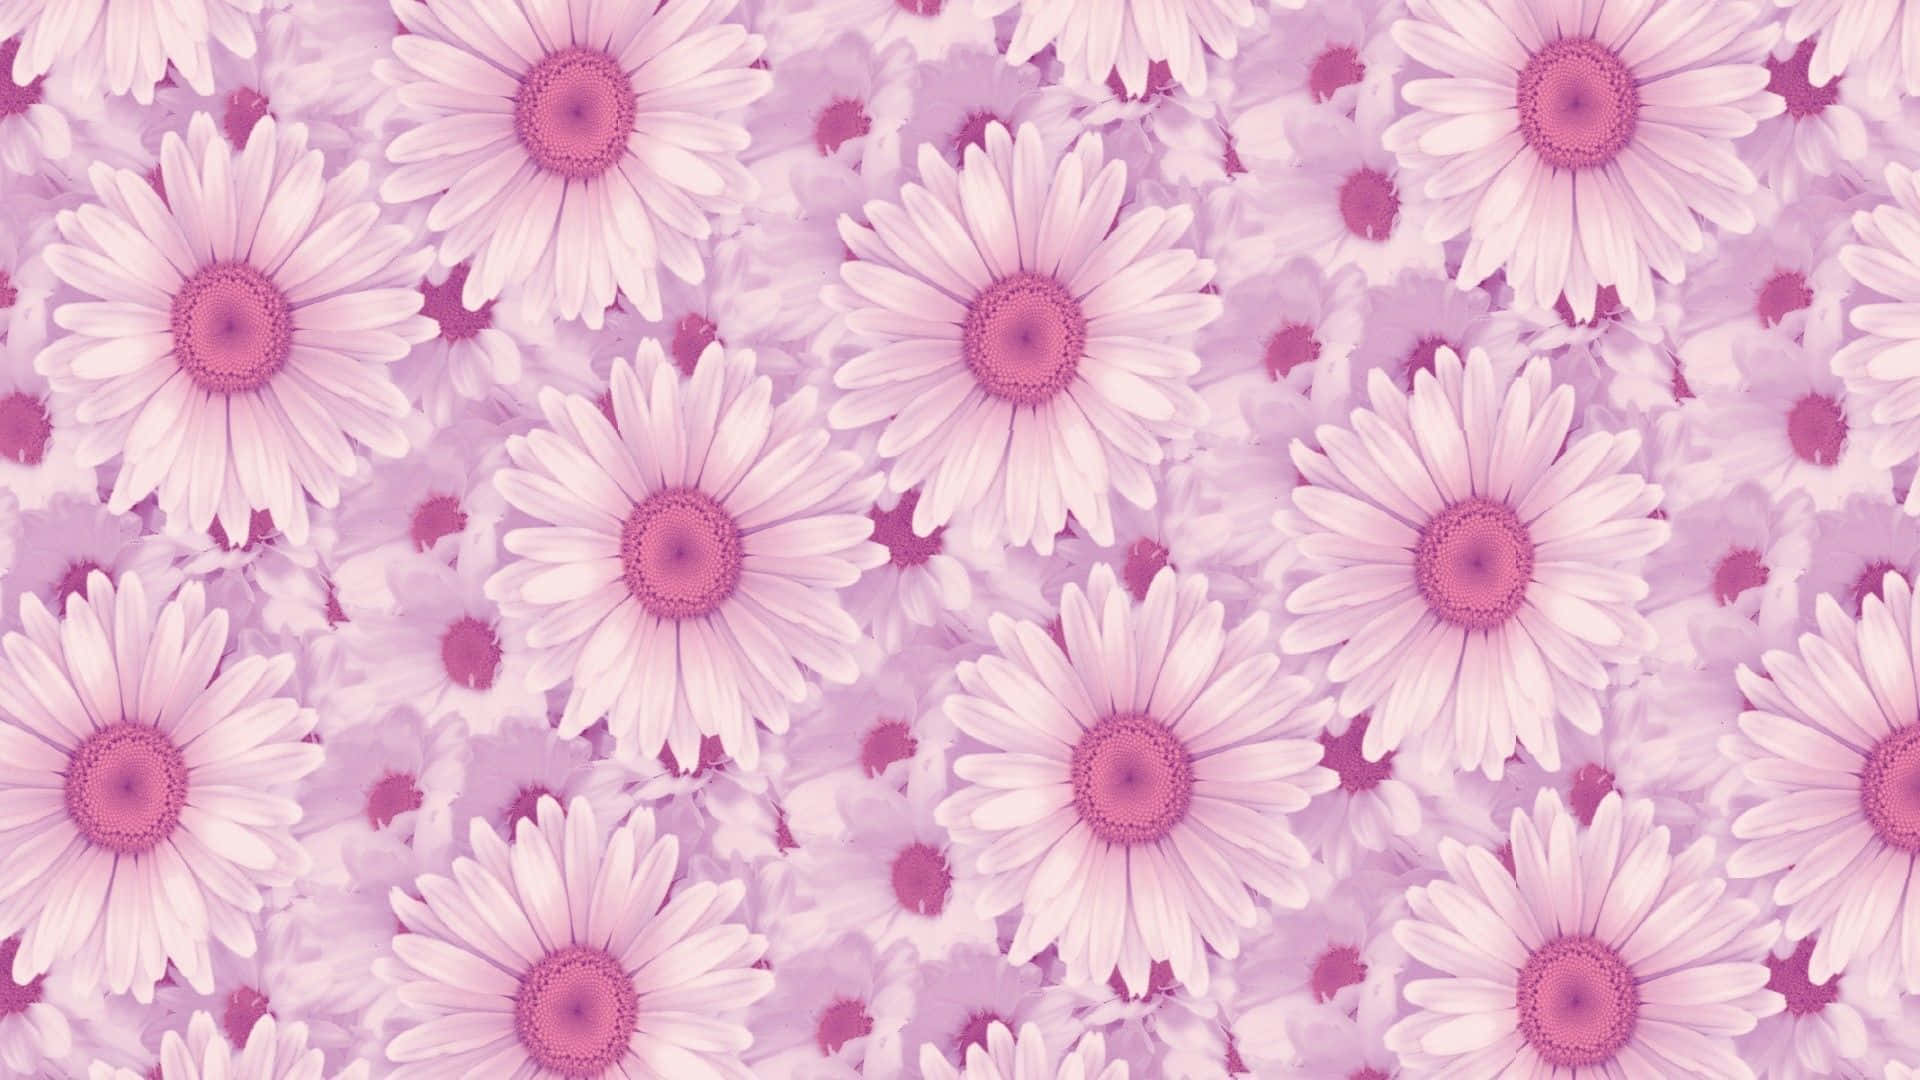 Pink Flowers Aesthetic Tumblr Wallpaper